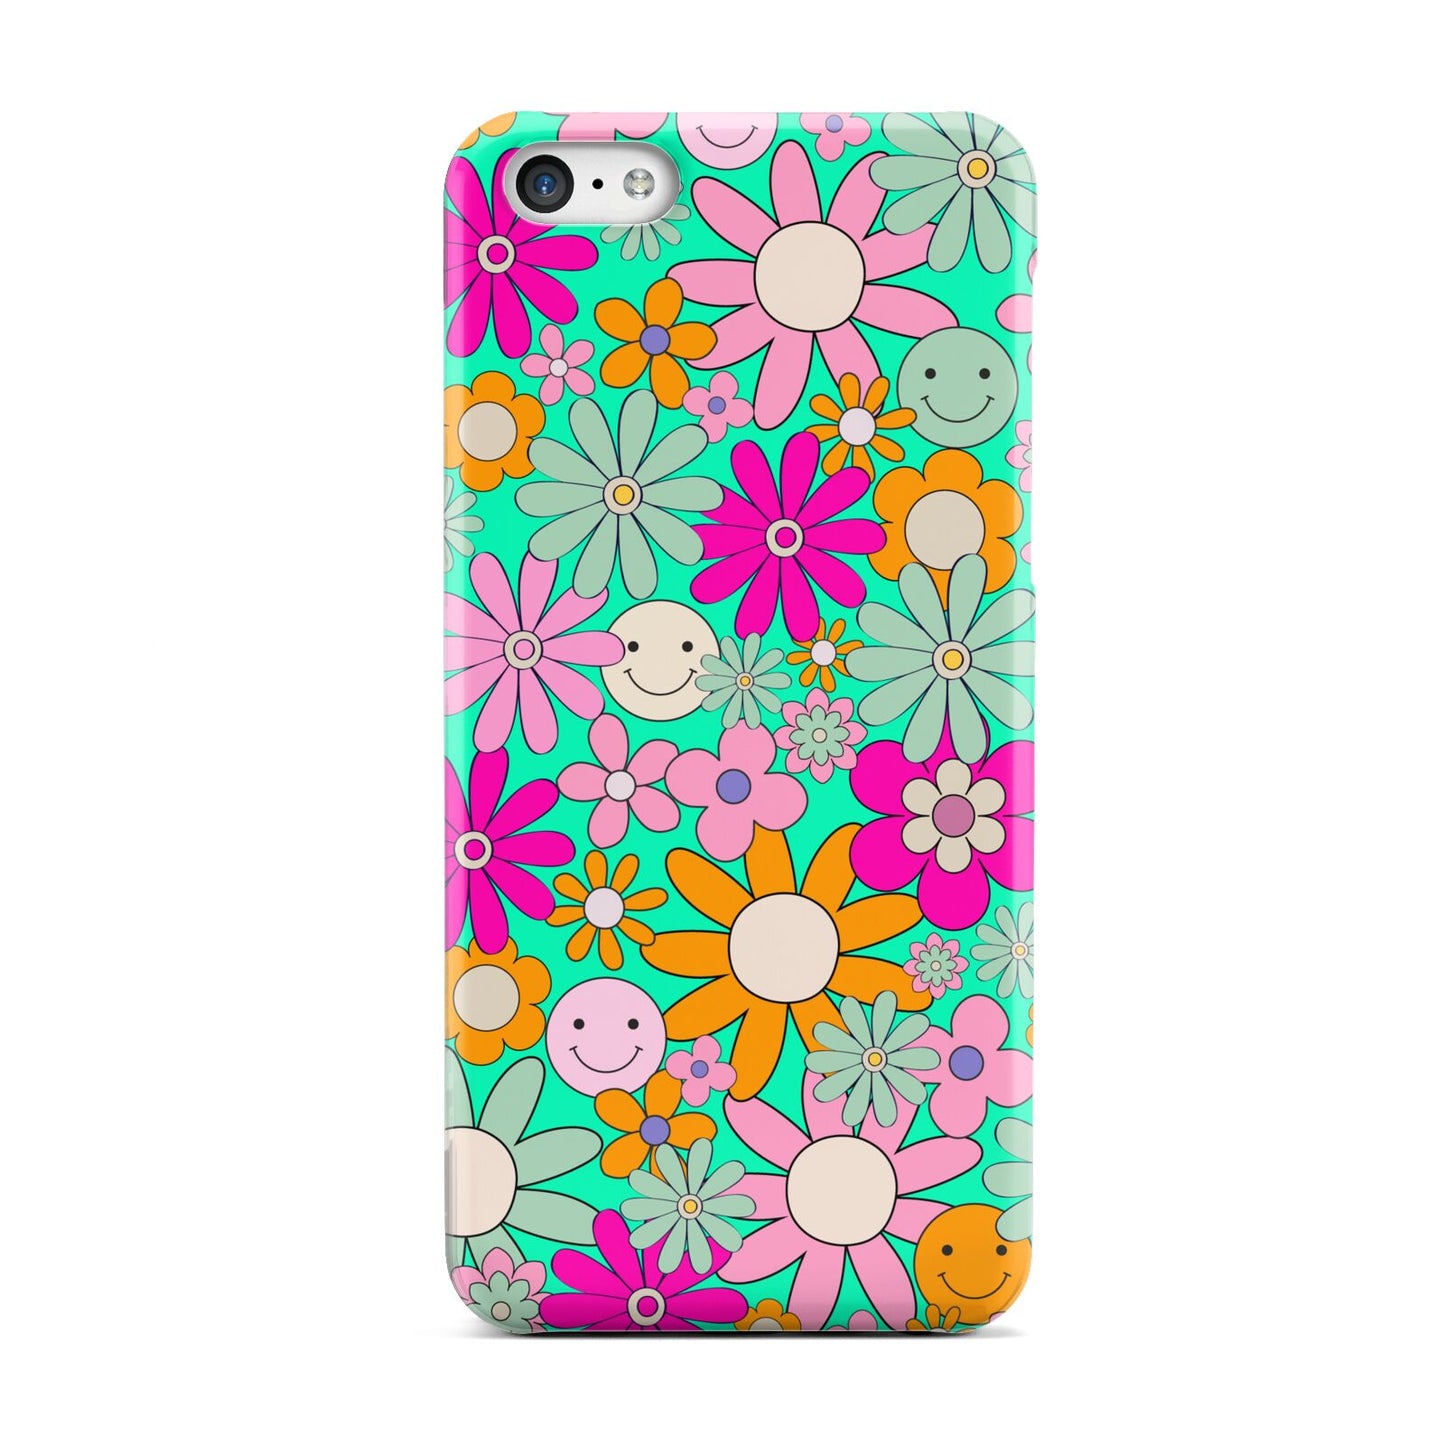 Hippy Floral Apple iPhone 5c Case